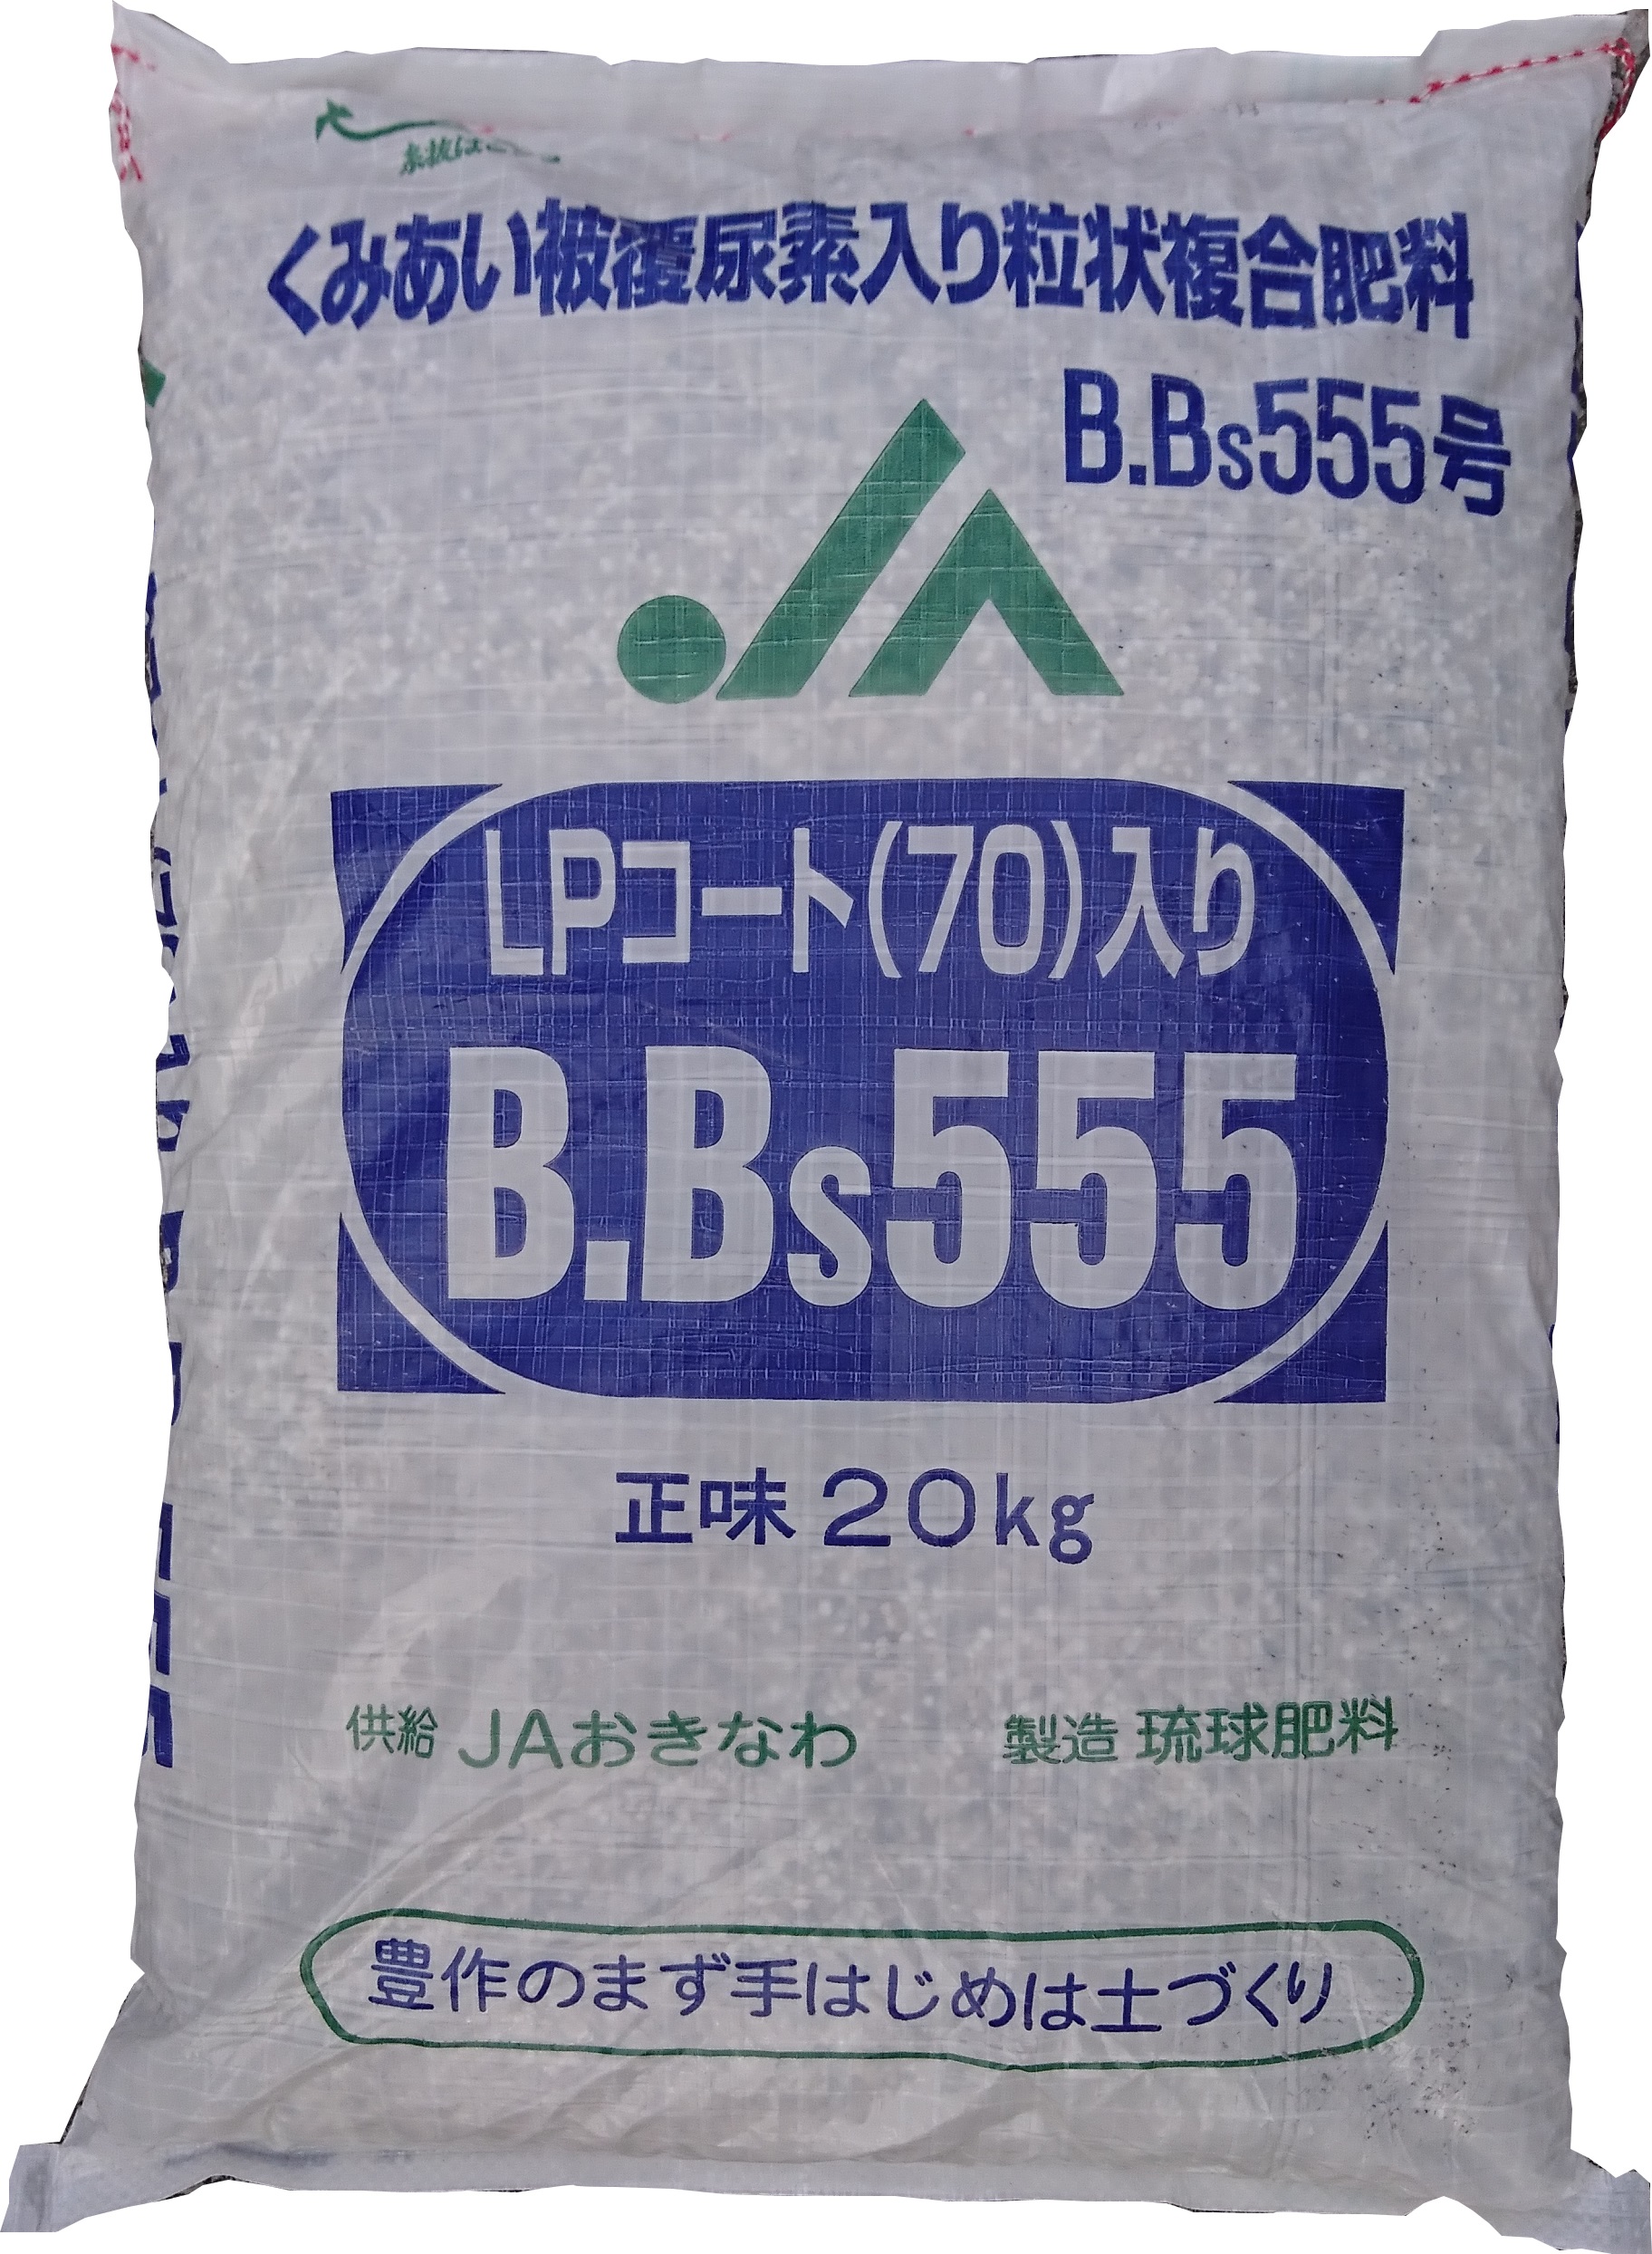 BBs555(70)